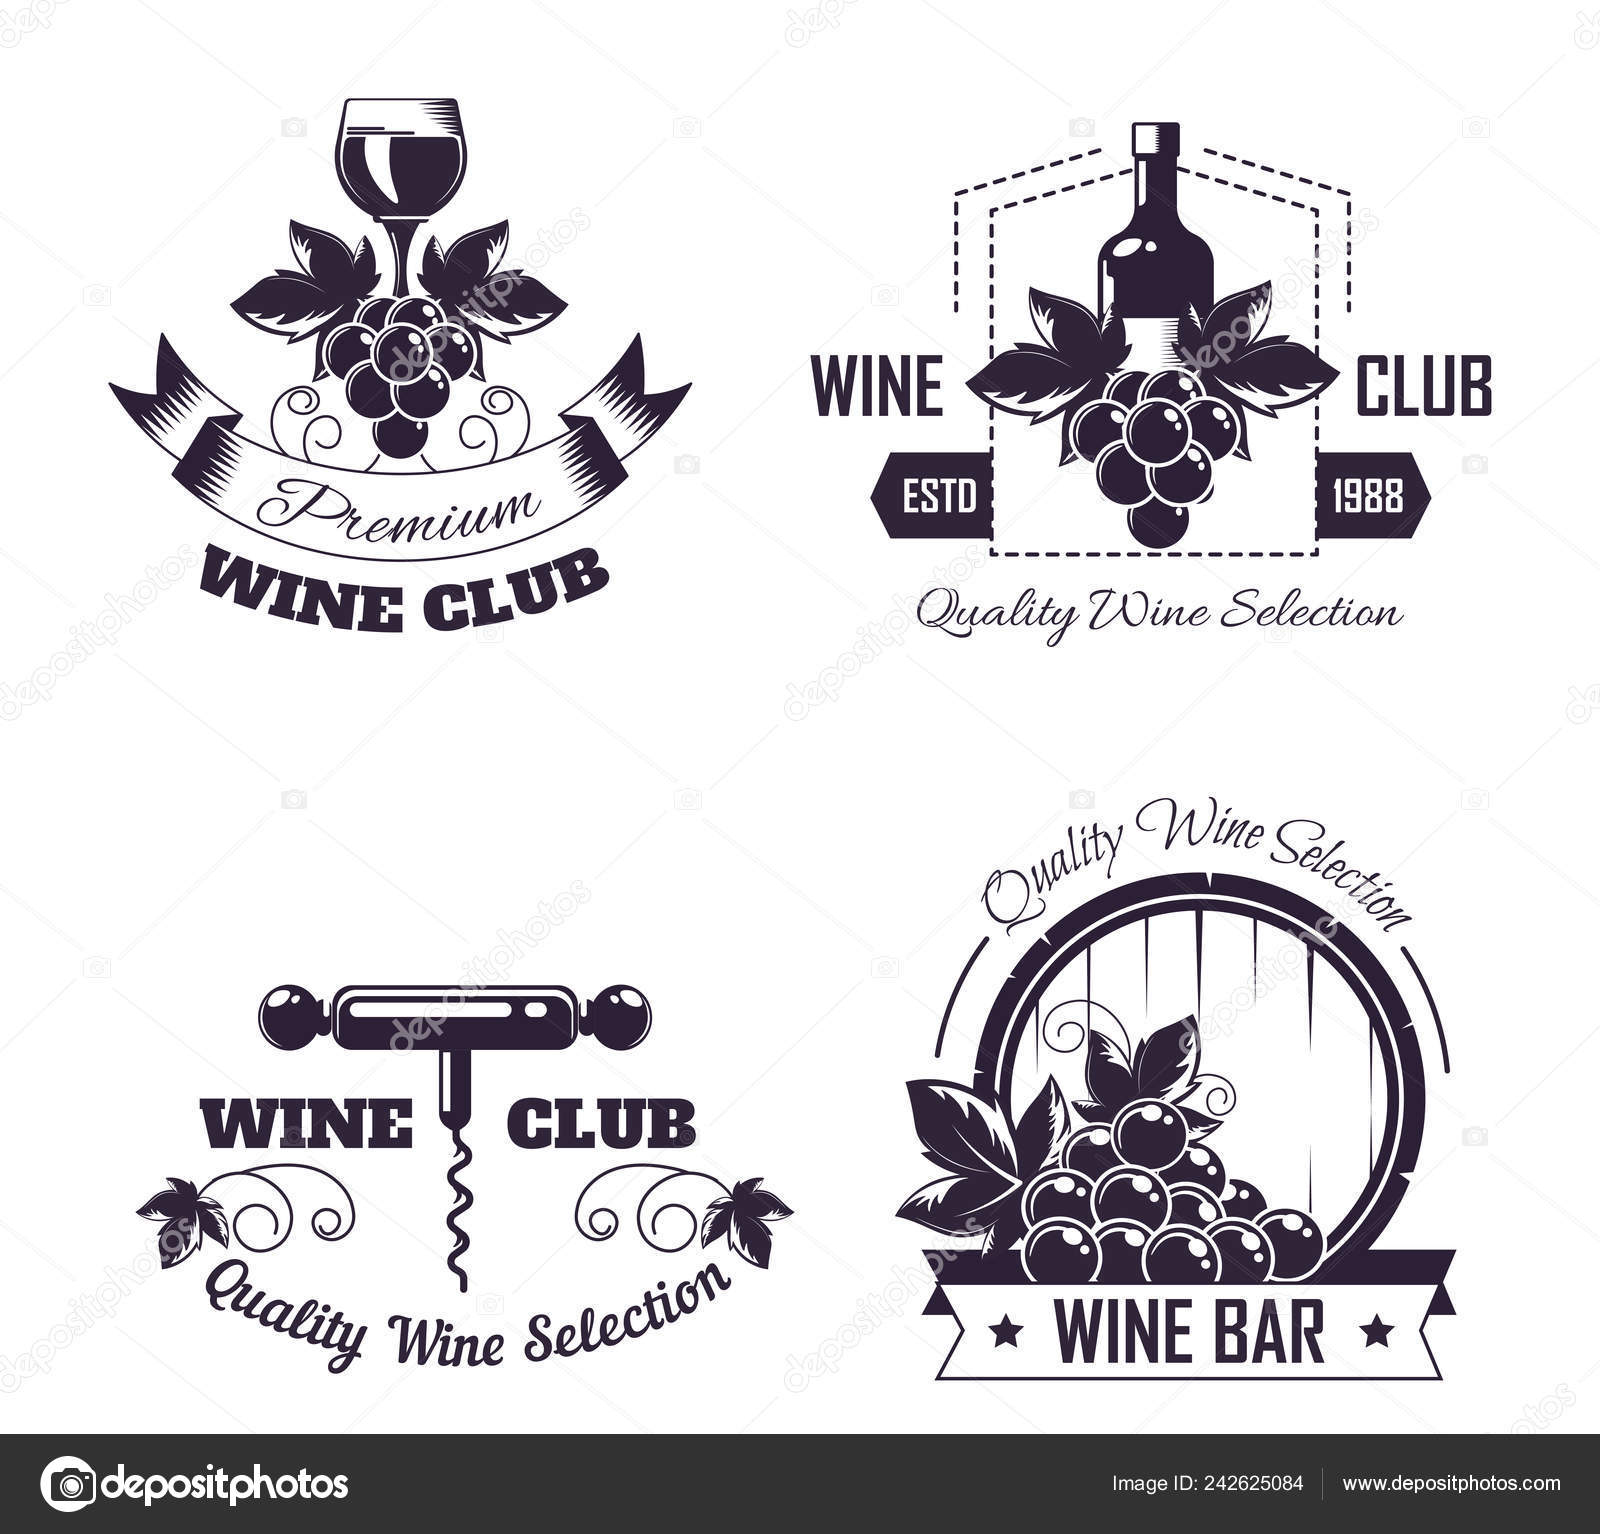 https://st4.depositphotos.com/1028367/24262/v/1600/depositphotos_242625084-stock-illustration-wine-club-house-logo-templates.jpg